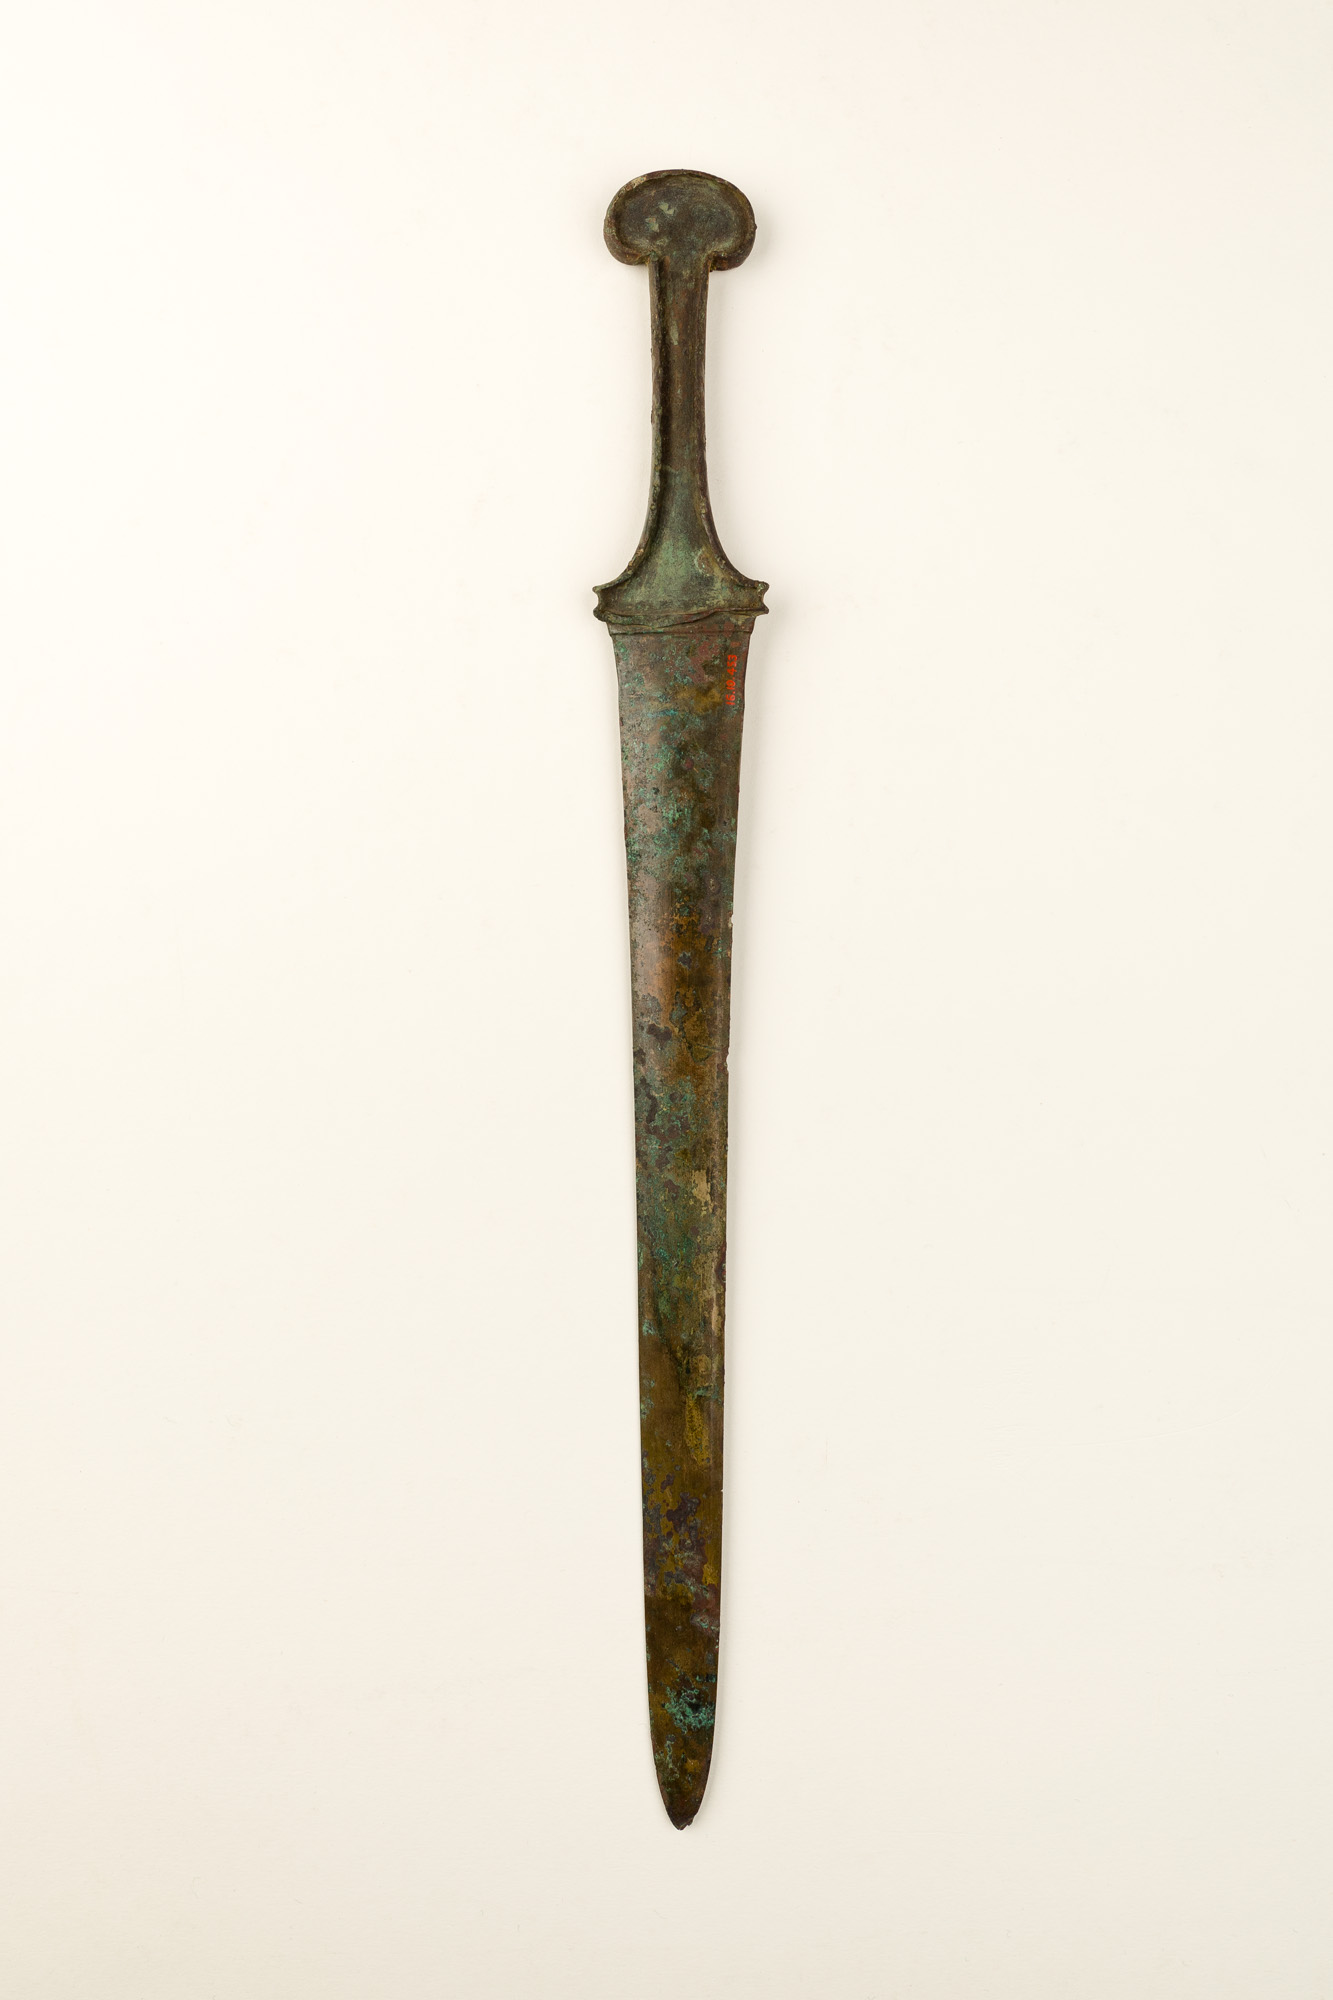 Ancient Egyptian Swords